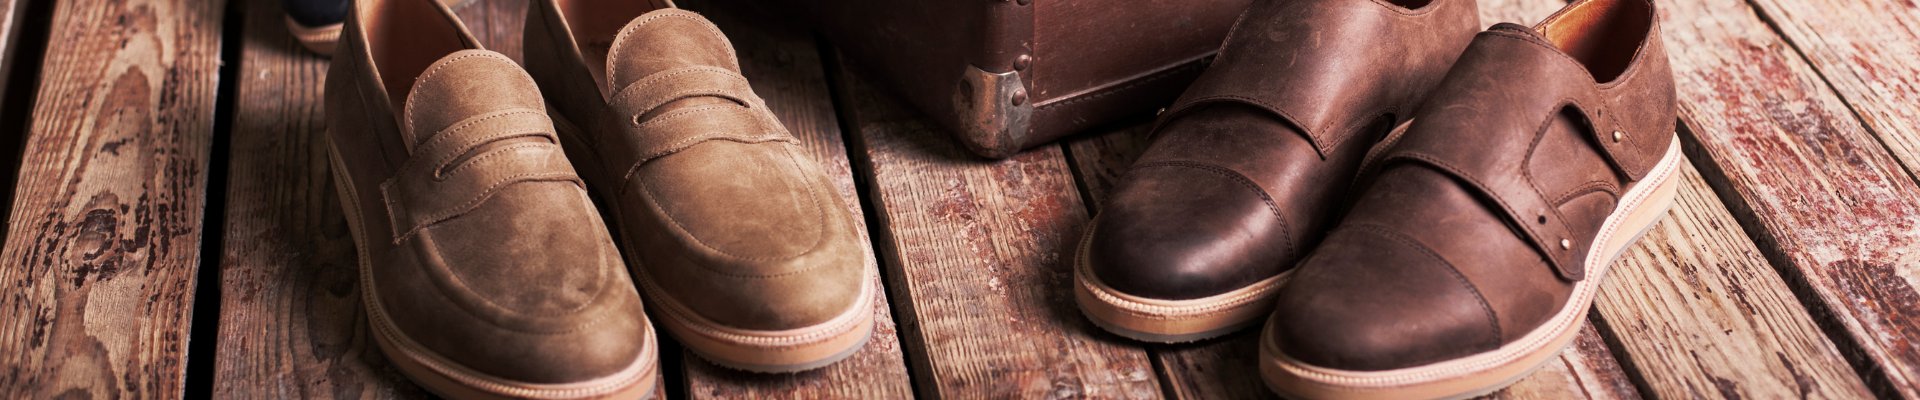 Men's Footwear: Comfy - Eco-friendly Shoes